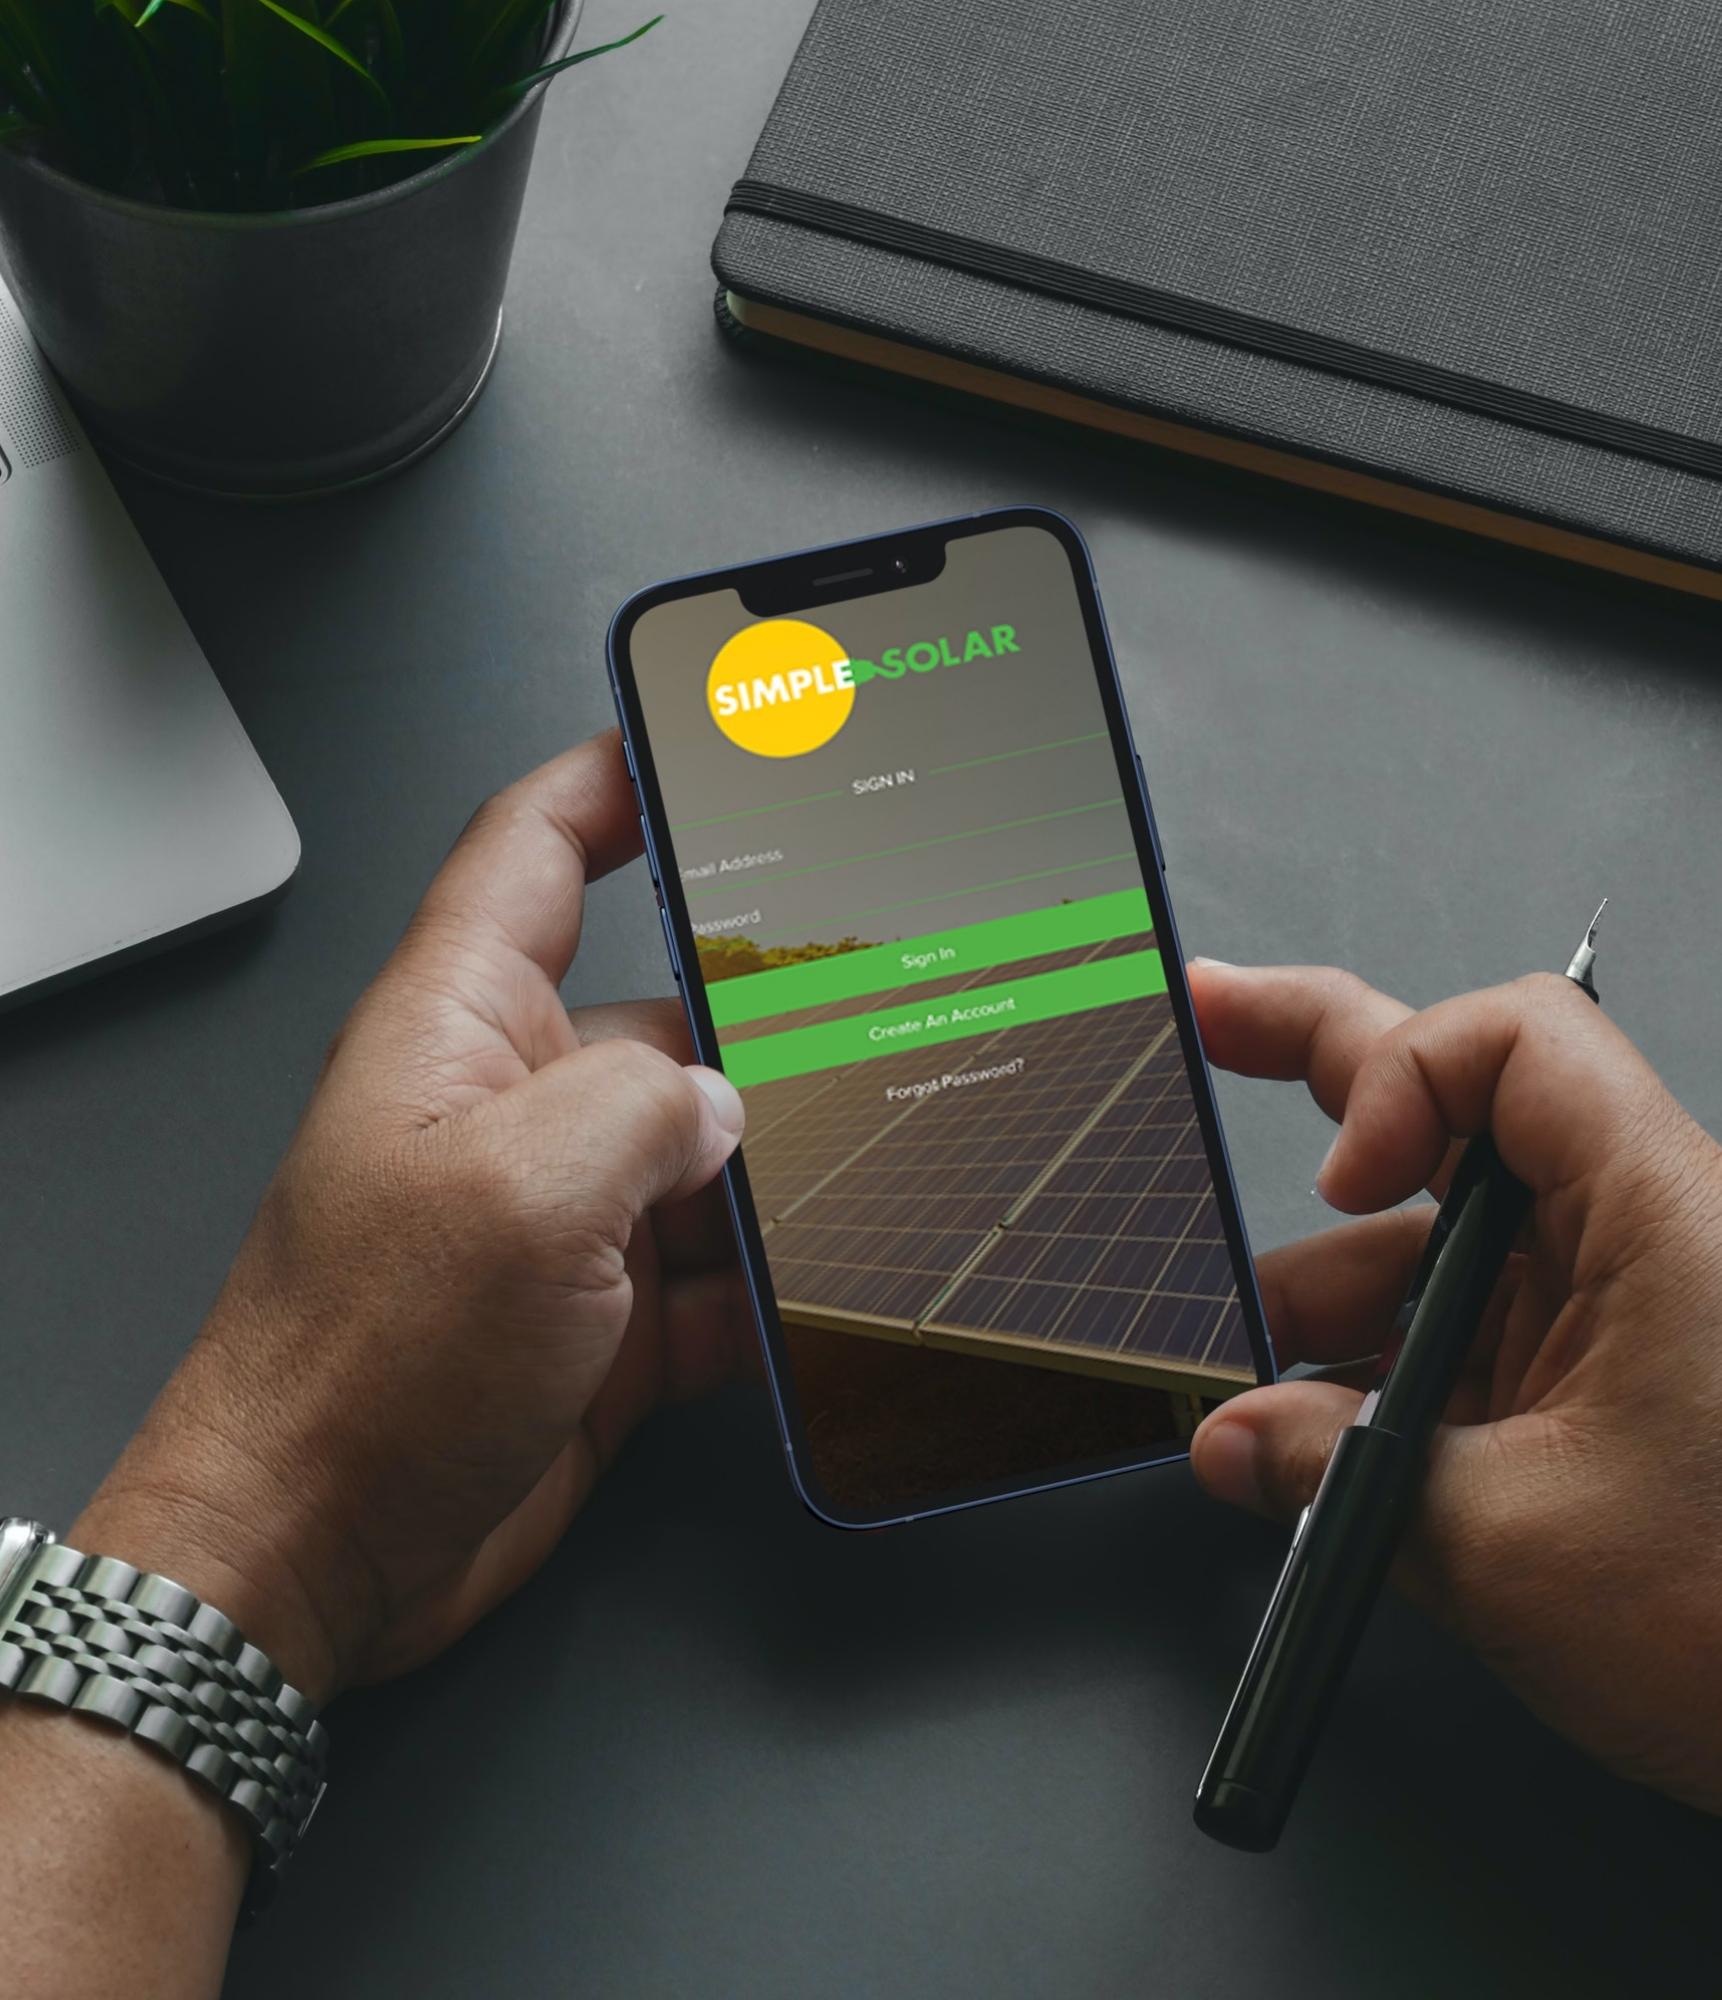 simple solar referral app login screen mobile